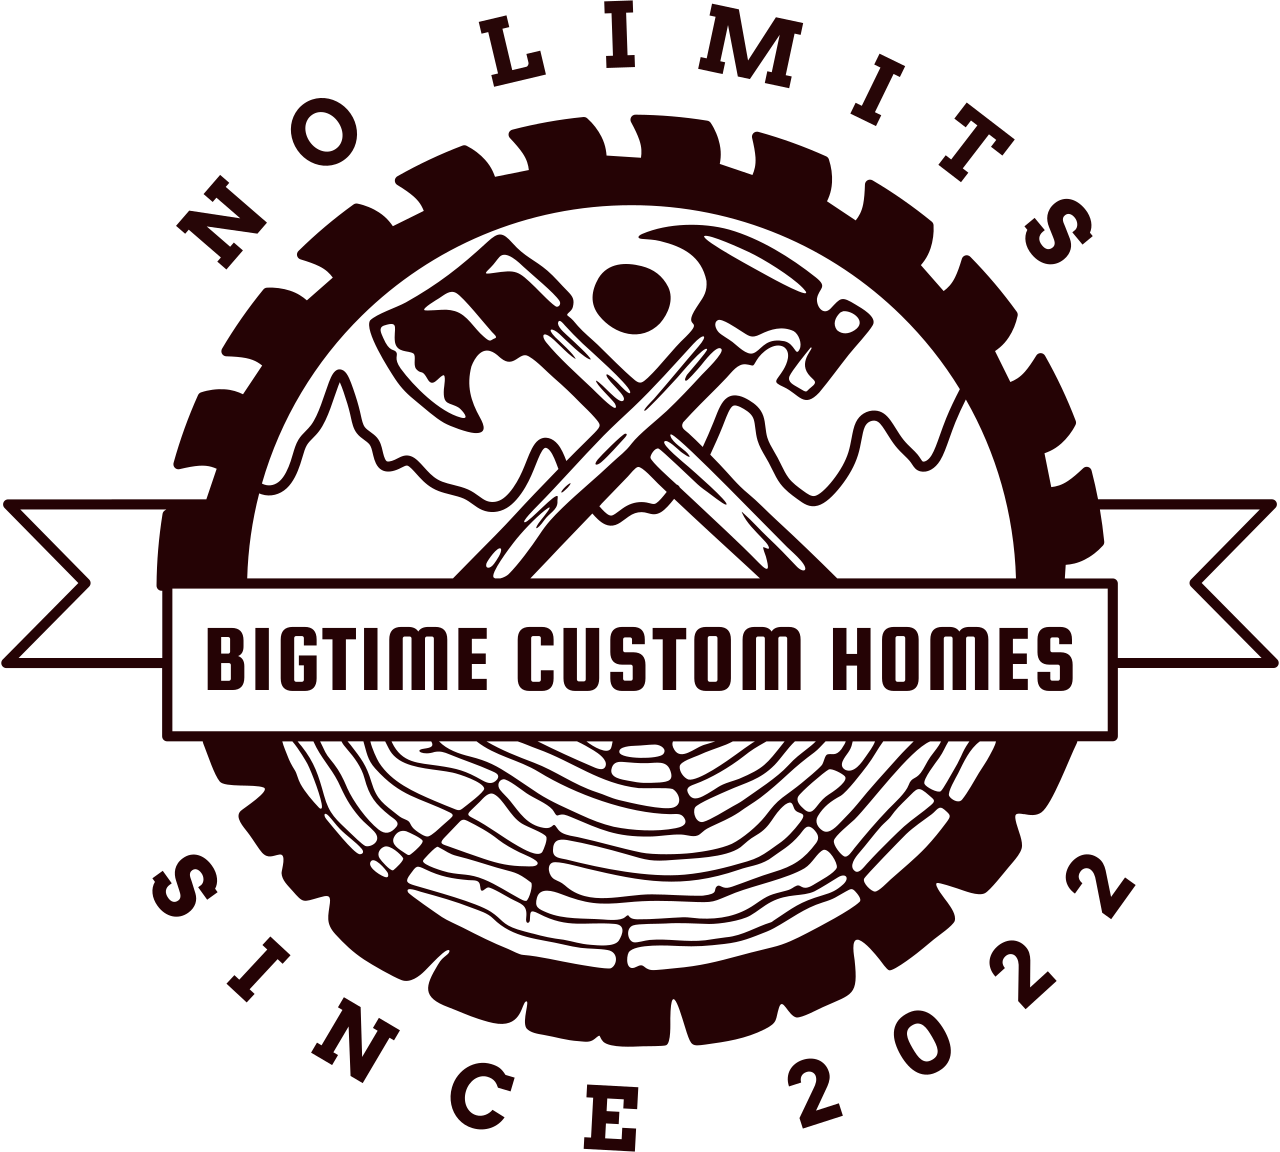 BigTime Custom Homes's logo